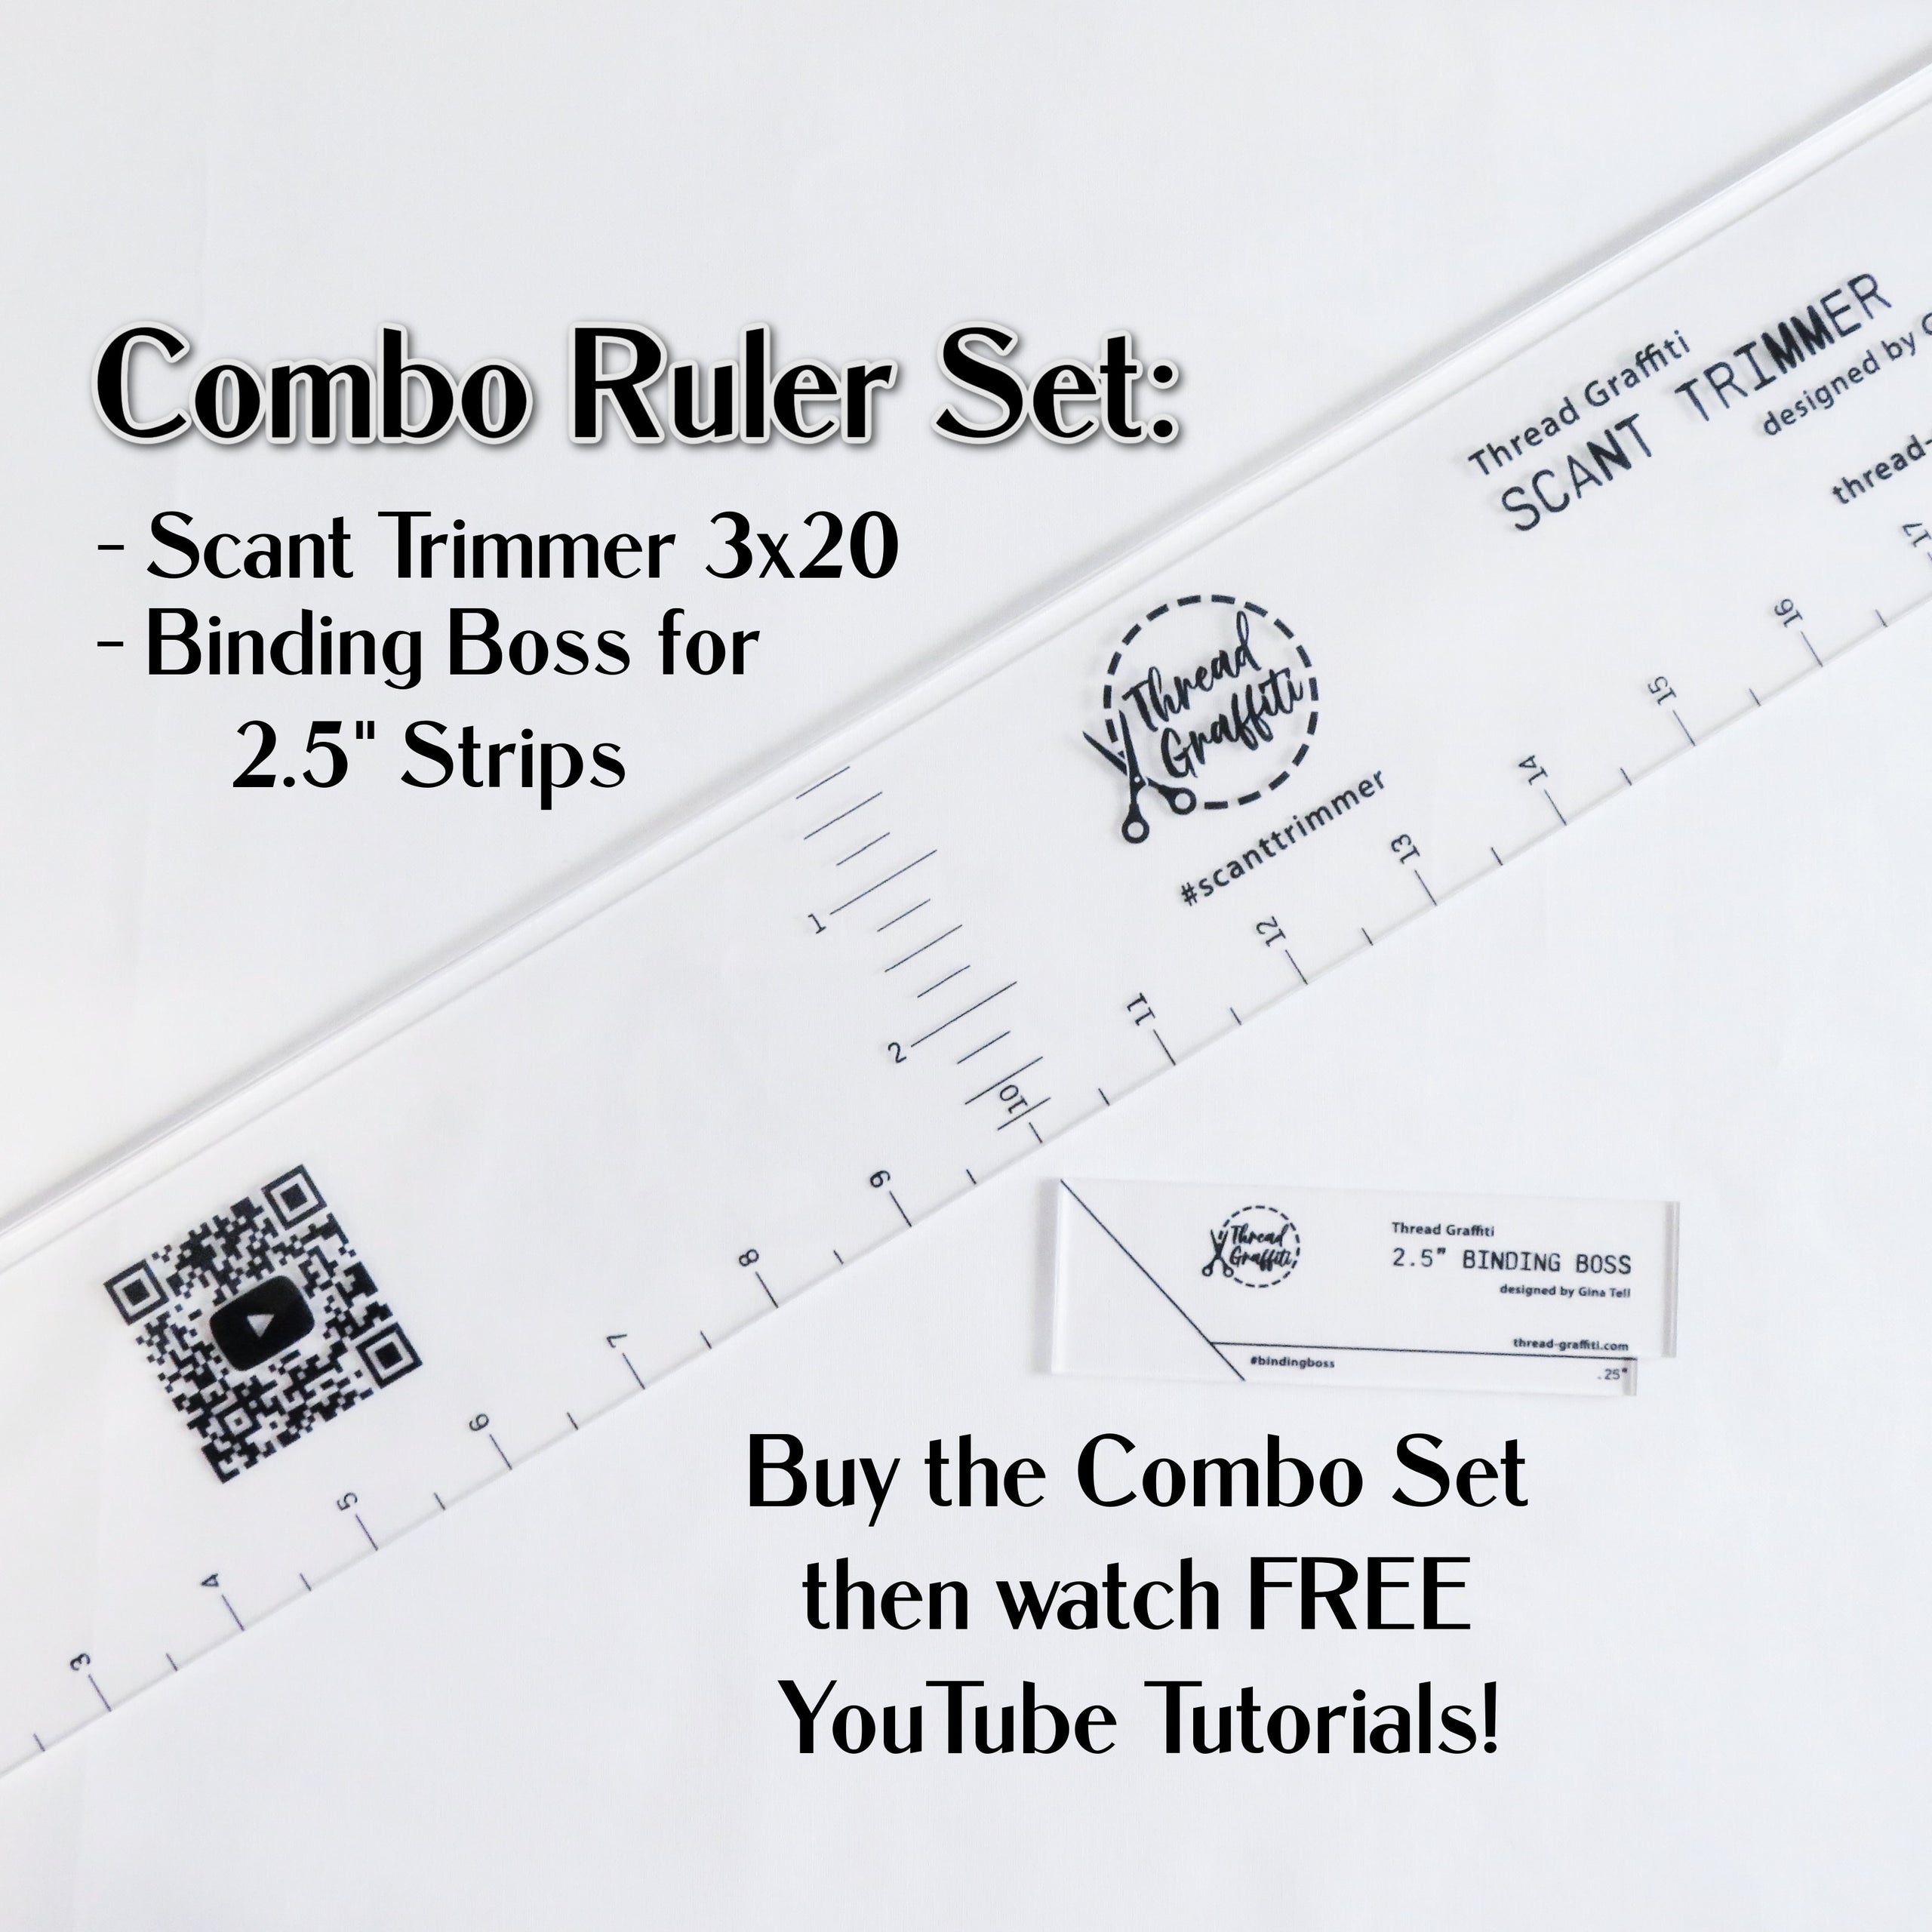 Combo Ruler Set designed by Gina Tell